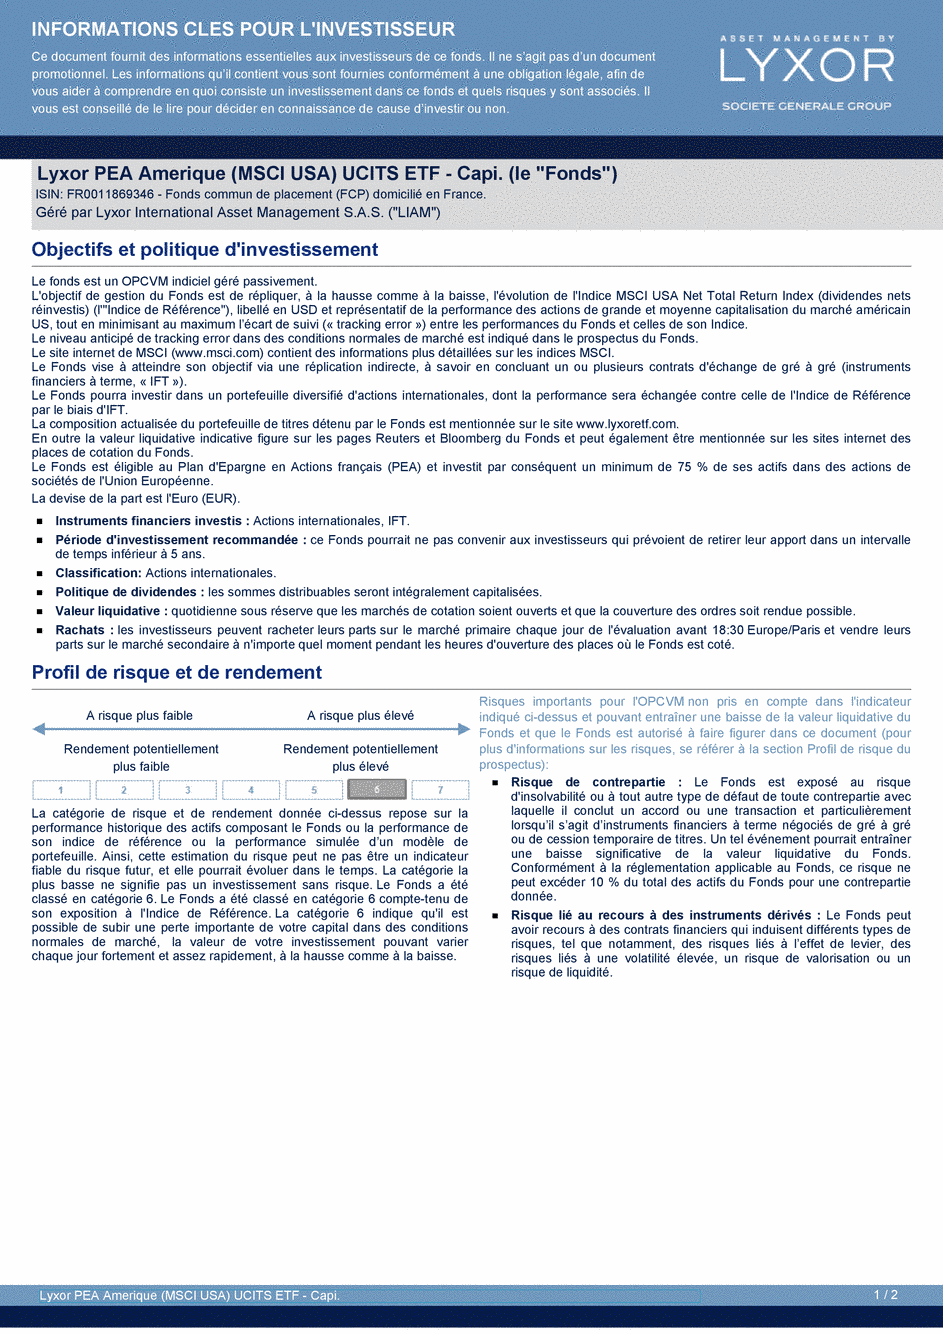 DICI Lyxor PEA Amerique (MSCI USA) UCITS ETF - Capi. - 19/02/2021 - French